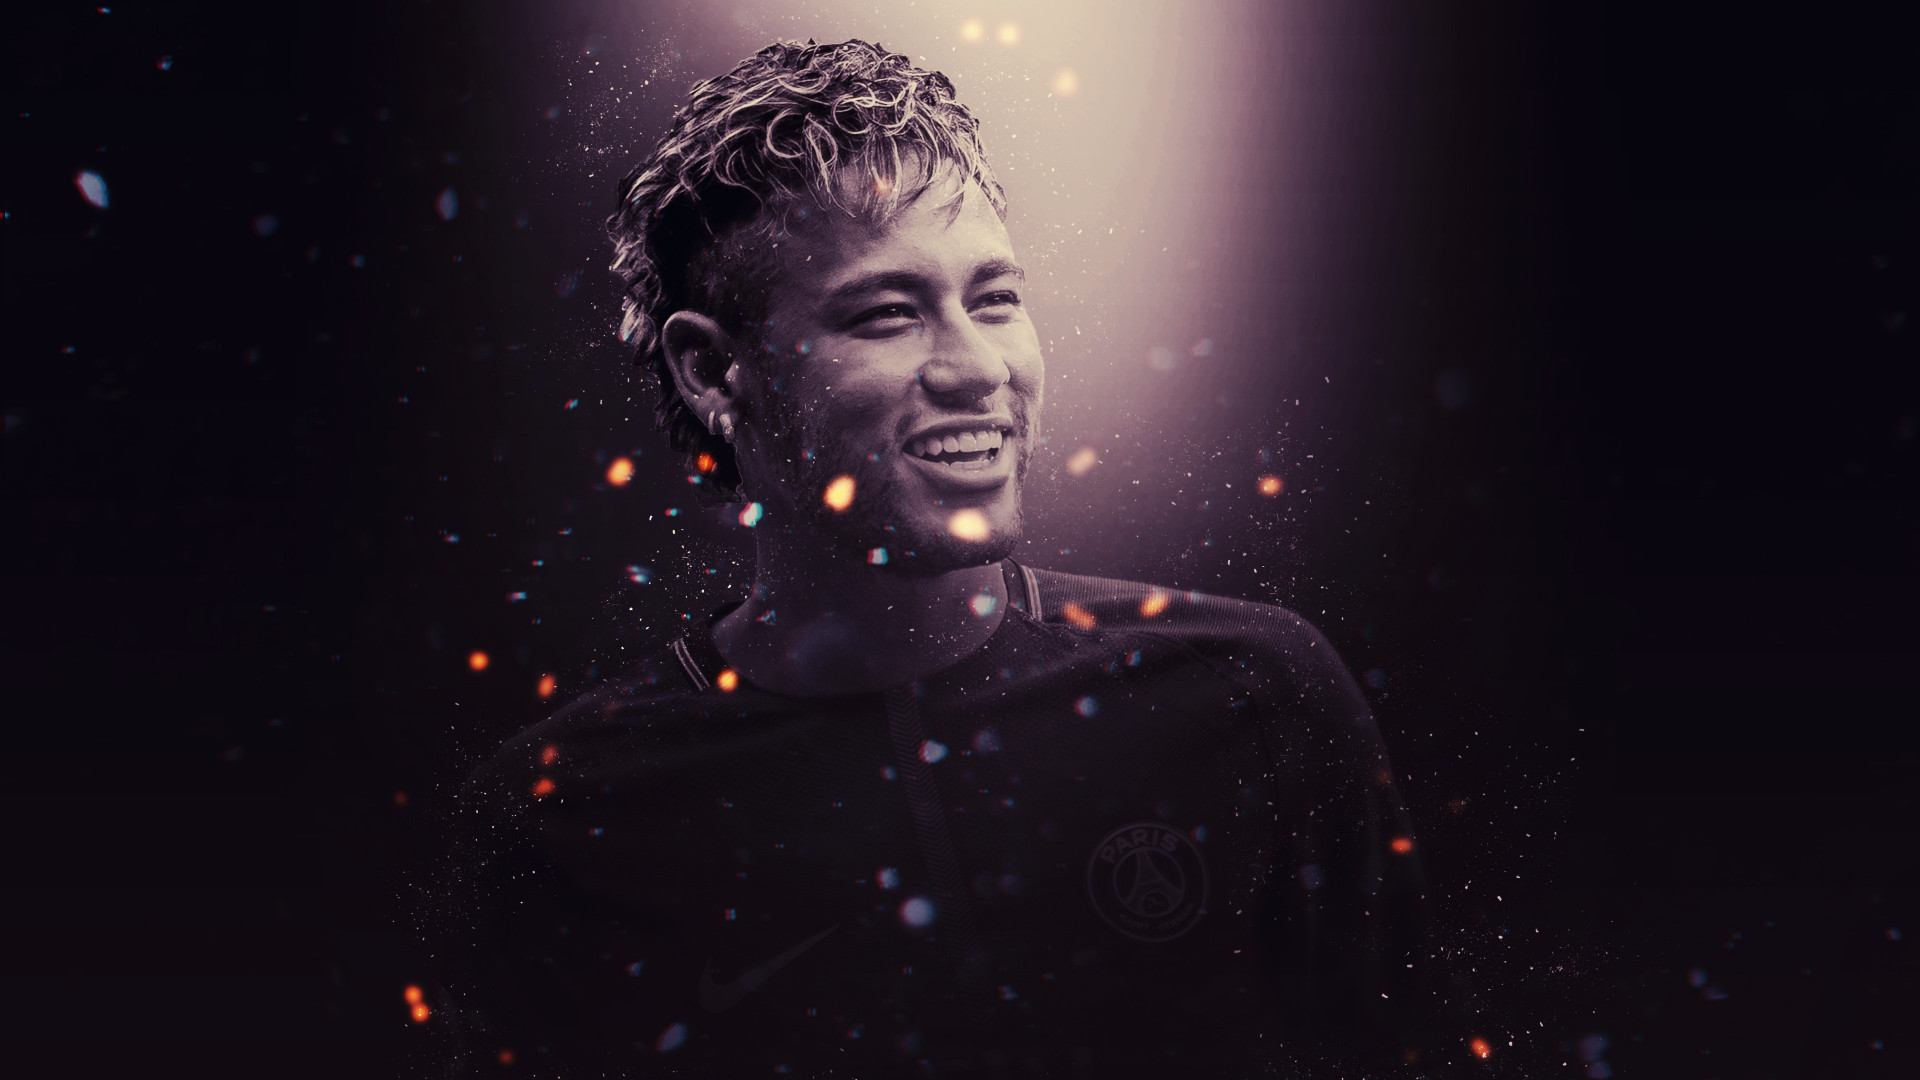 Download wallpaper: Neymar for PSG 1920x1080